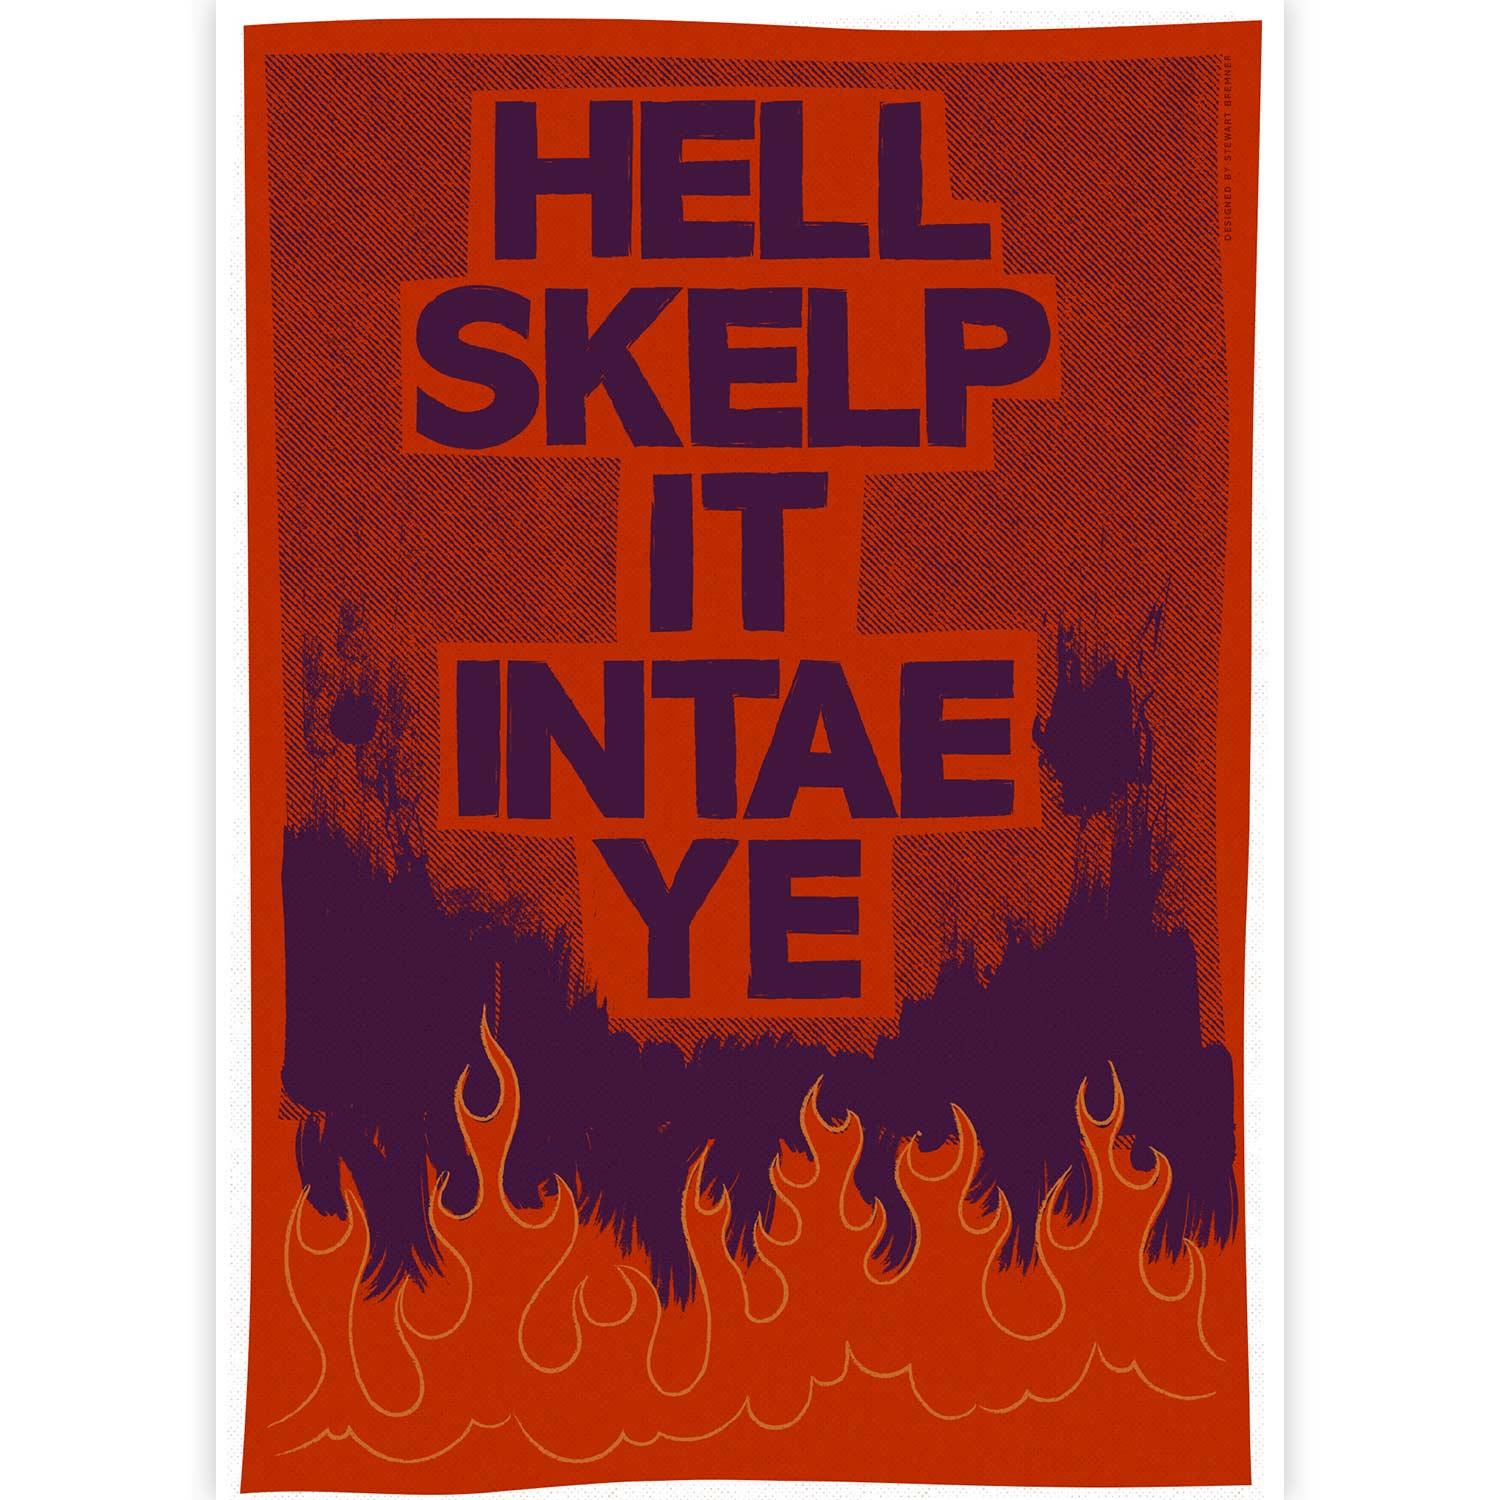 Hell Slap it Intae Ye by Stewart Bremner